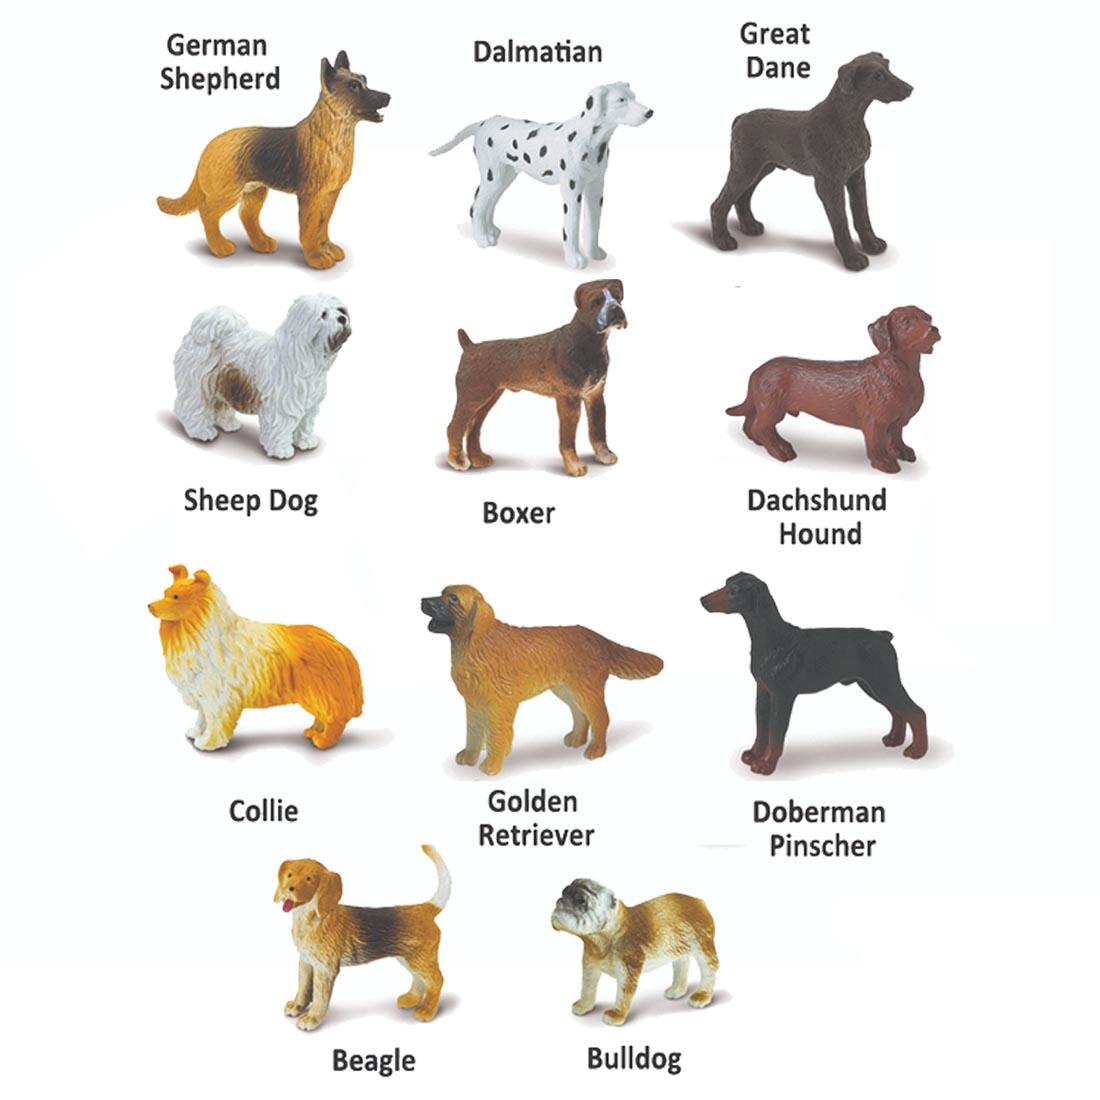 11 Dog Figurines labeled with their names: german shepherd, dalmatian, great dane, sheep dog, boxer, dachshund hound, collie, golden retriever, doberman pinscher, beagle, bulldog